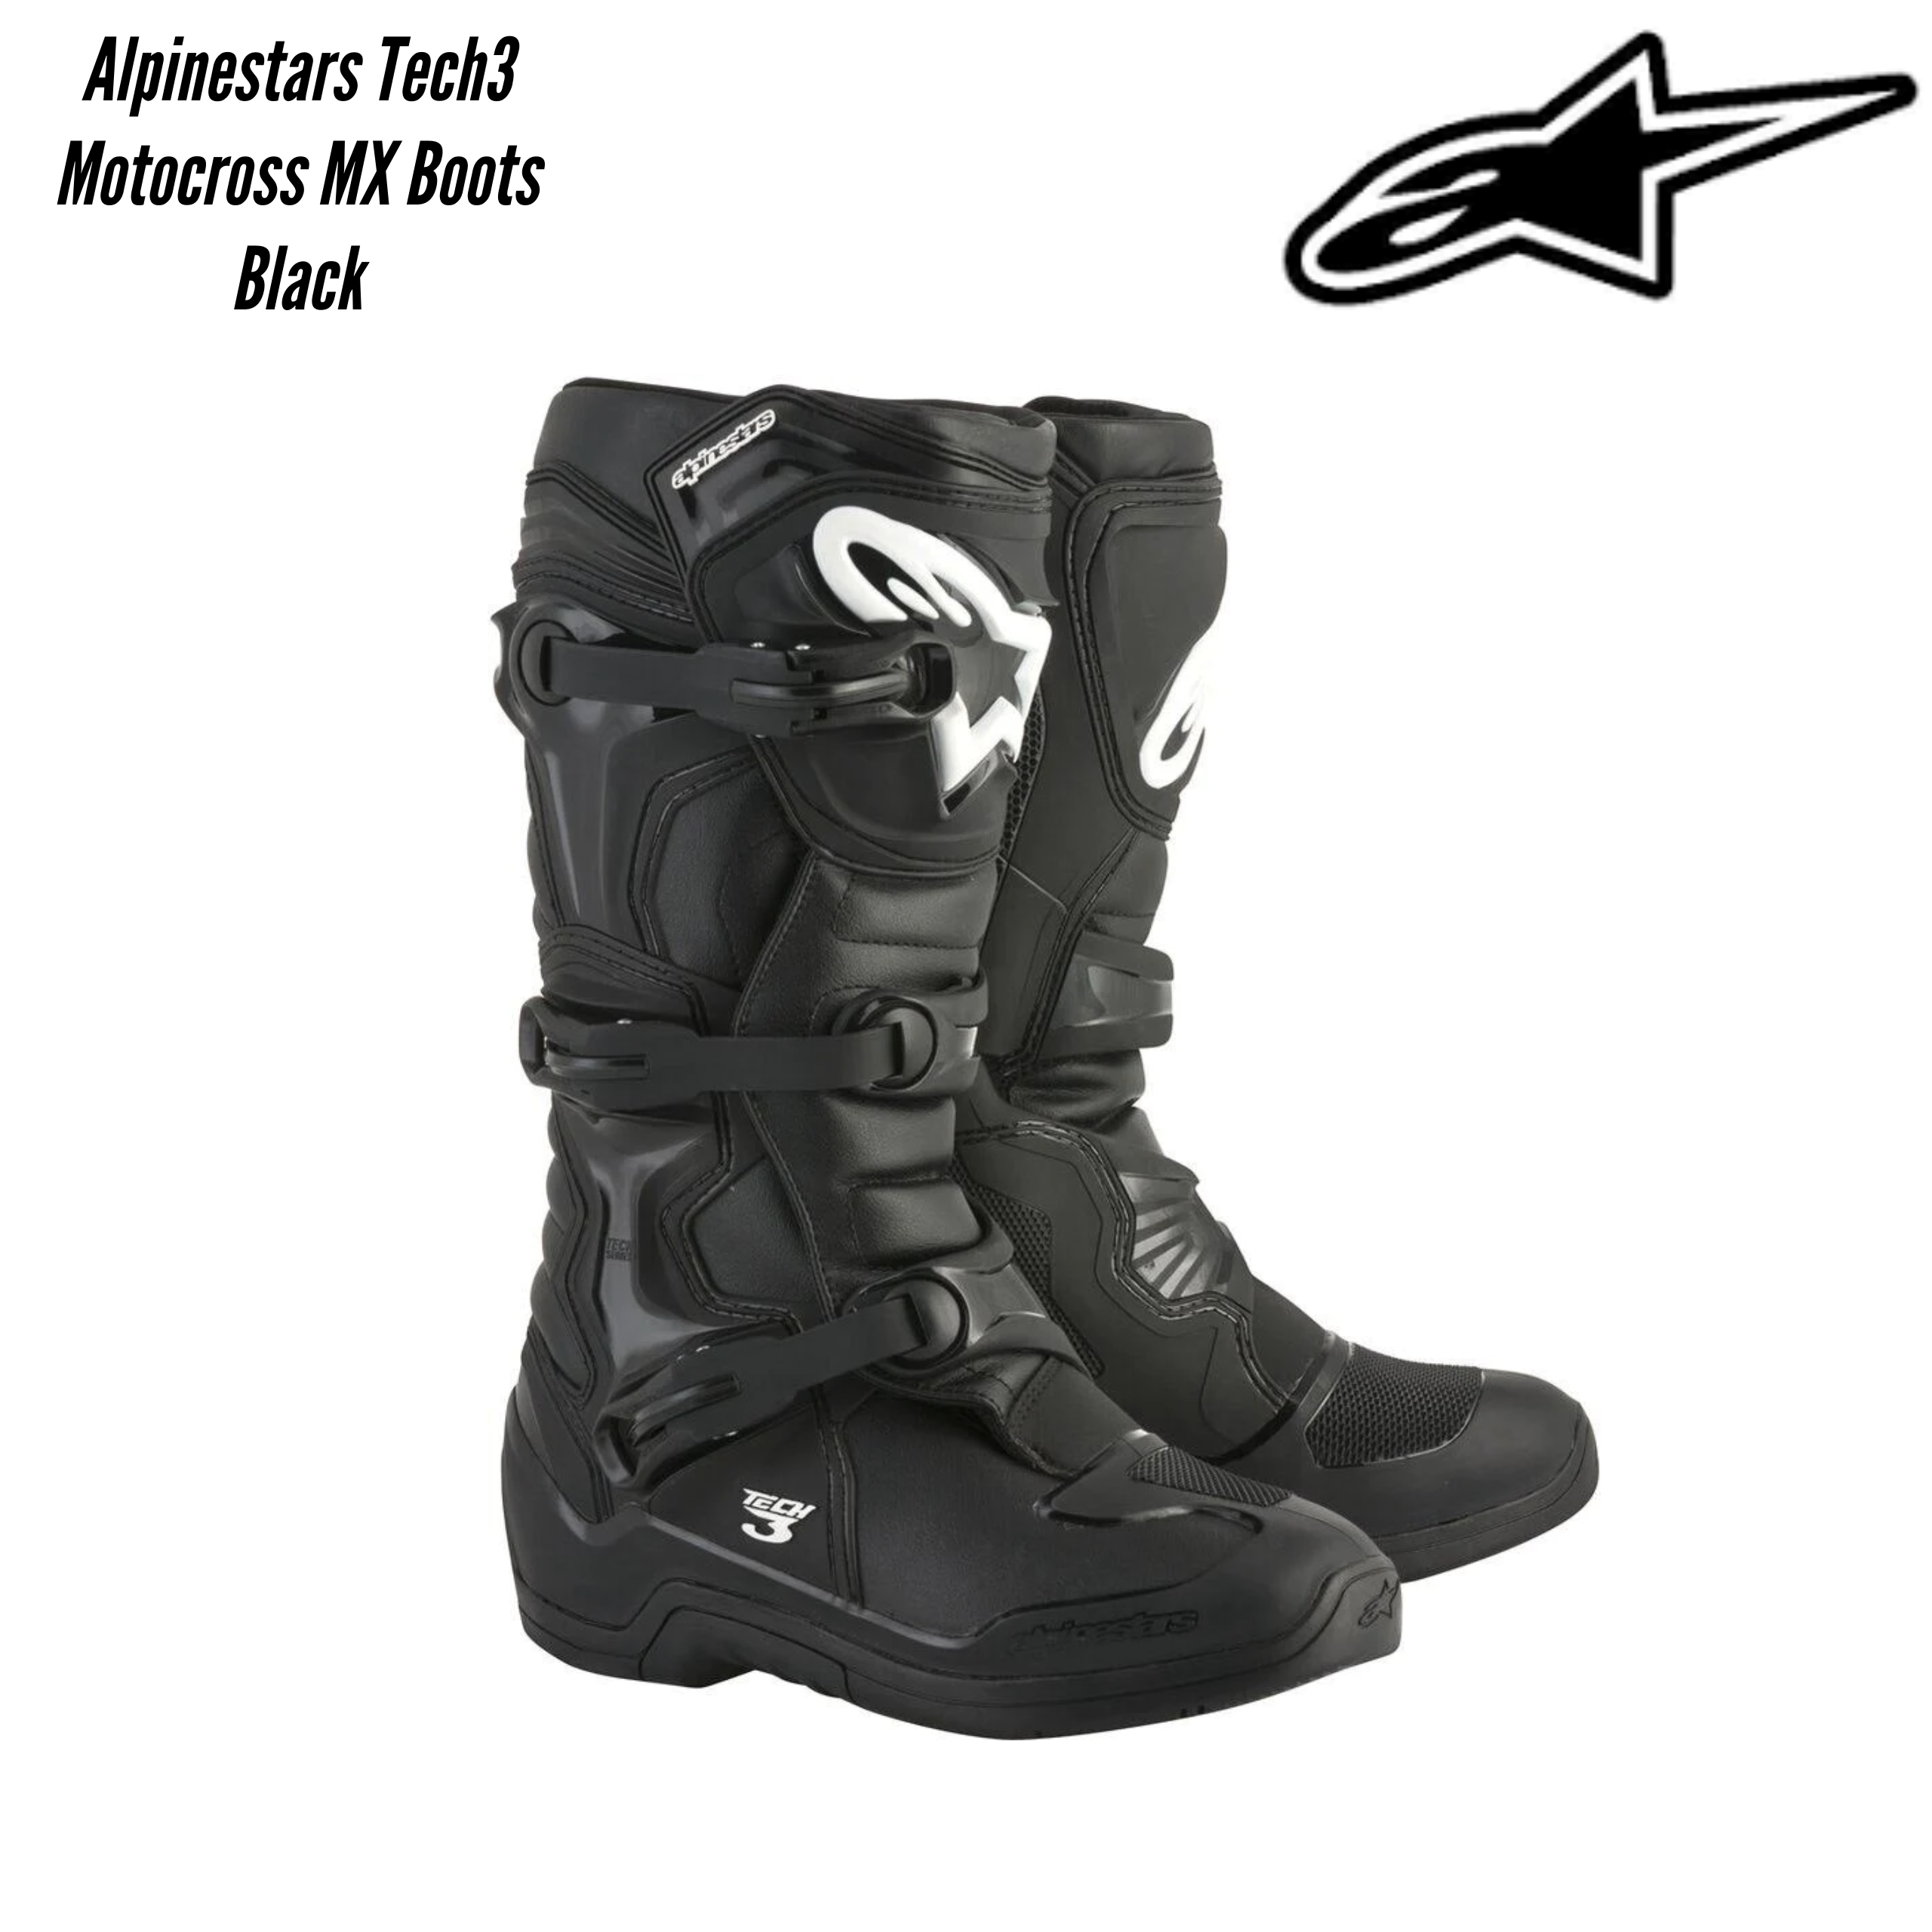 Alpinestars Tech3 Motocross MX Boots Black